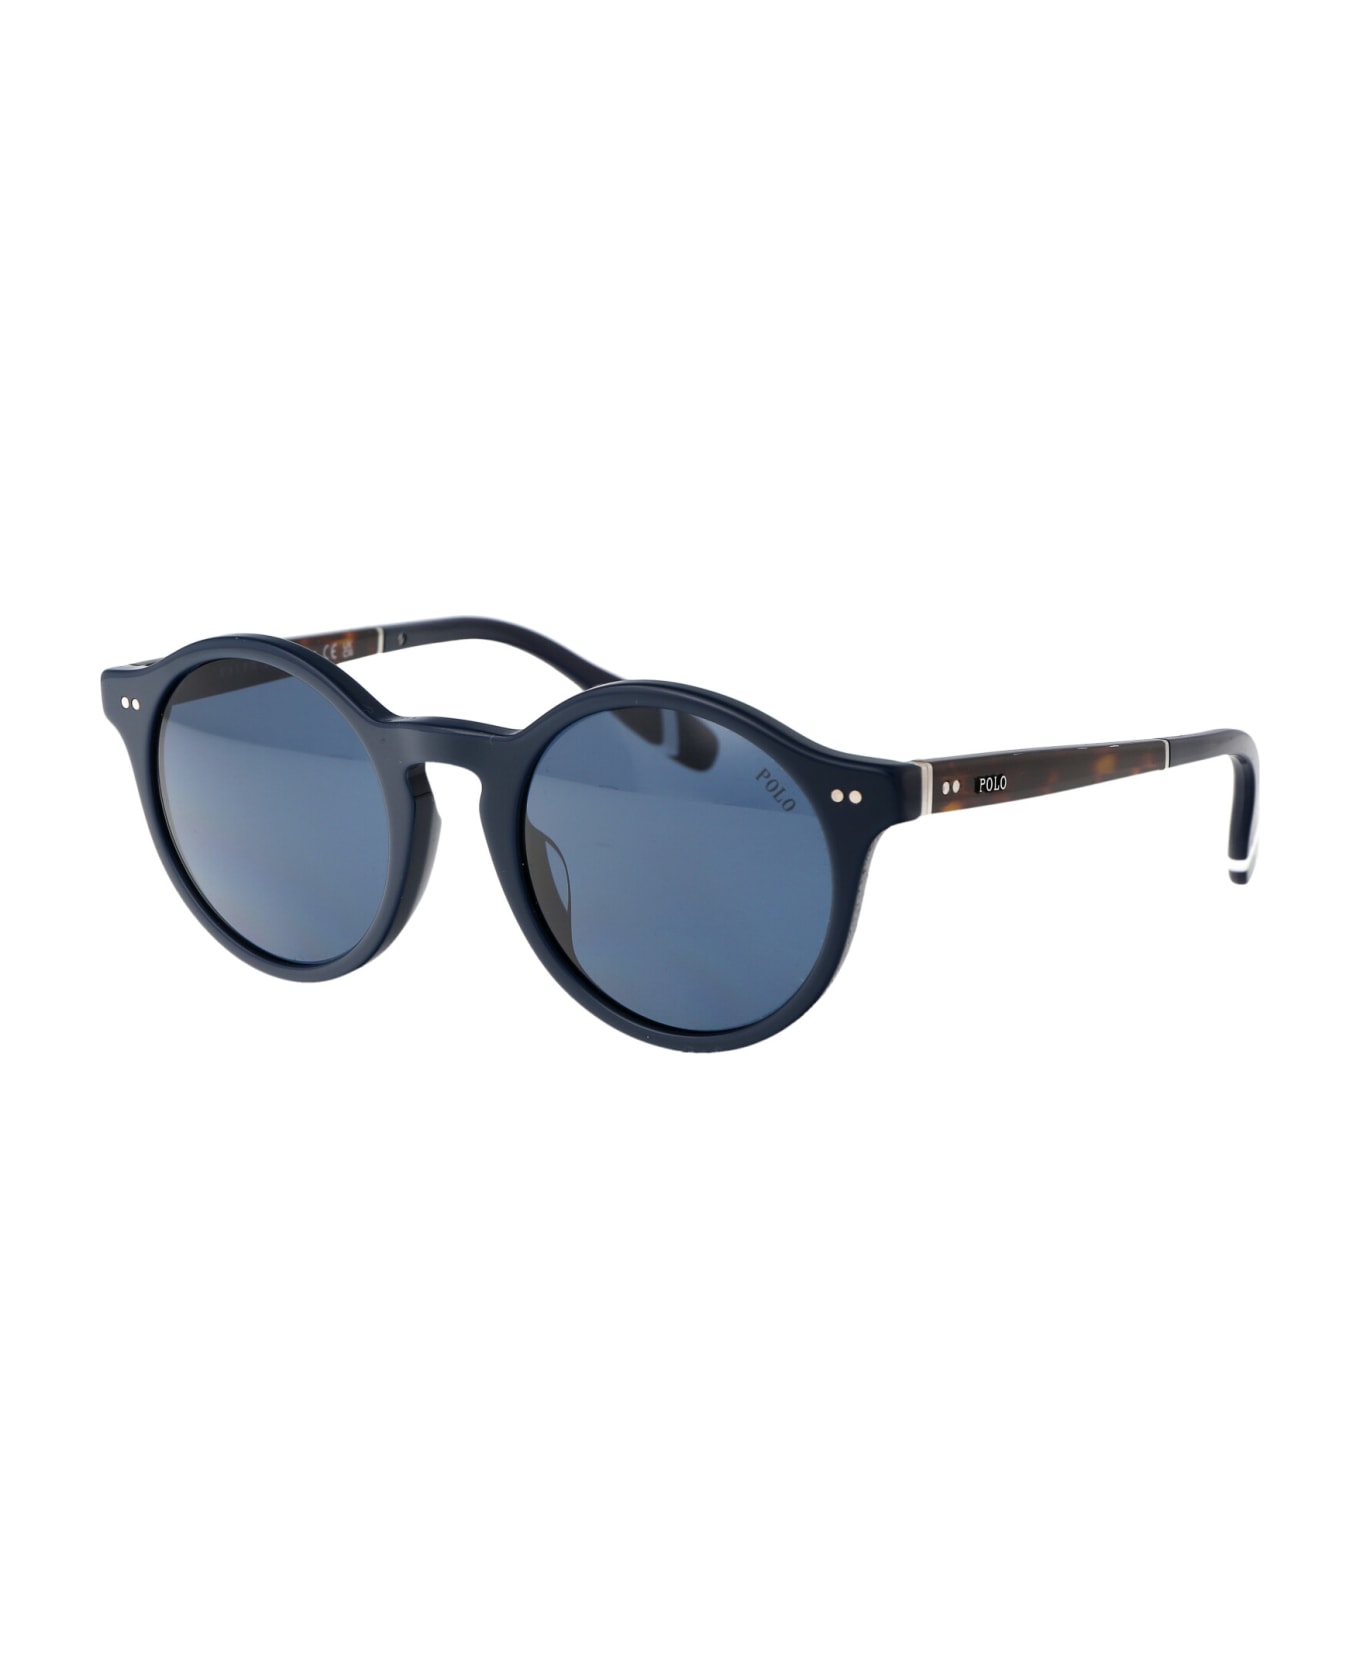 Polo Ralph Lauren 0ph4204u Sunglasses - 546580 Shiny Navy Blue